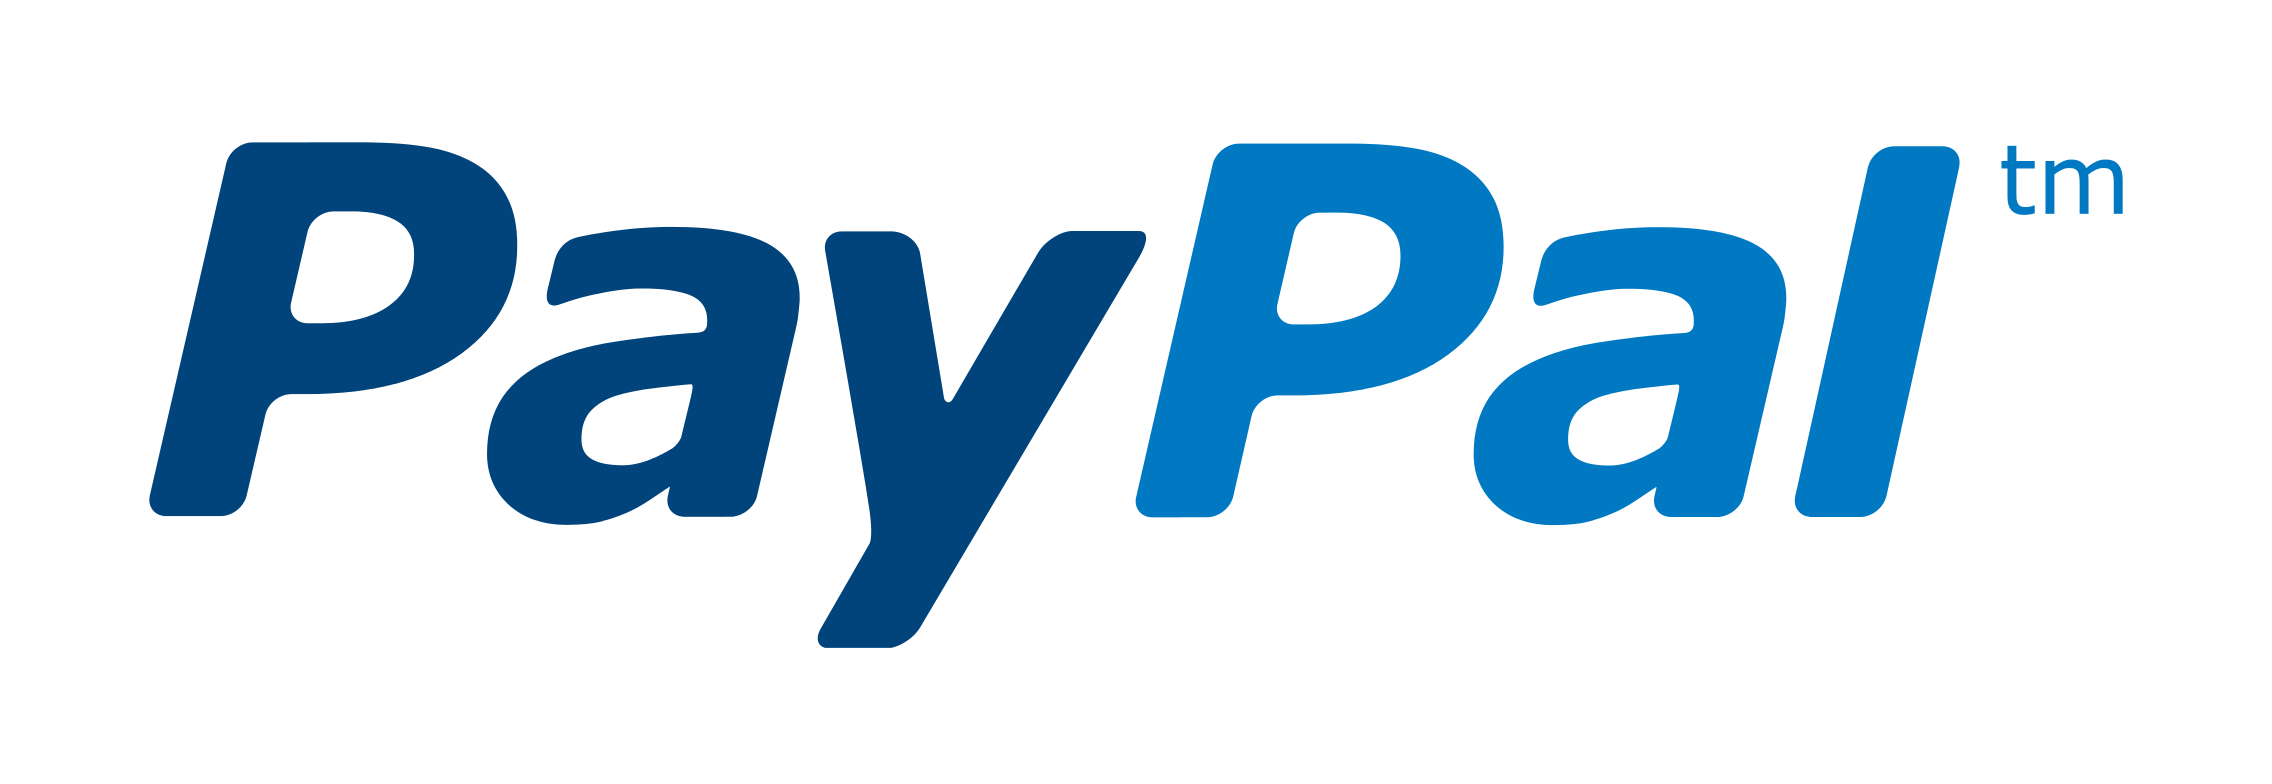 paypal-logo-2